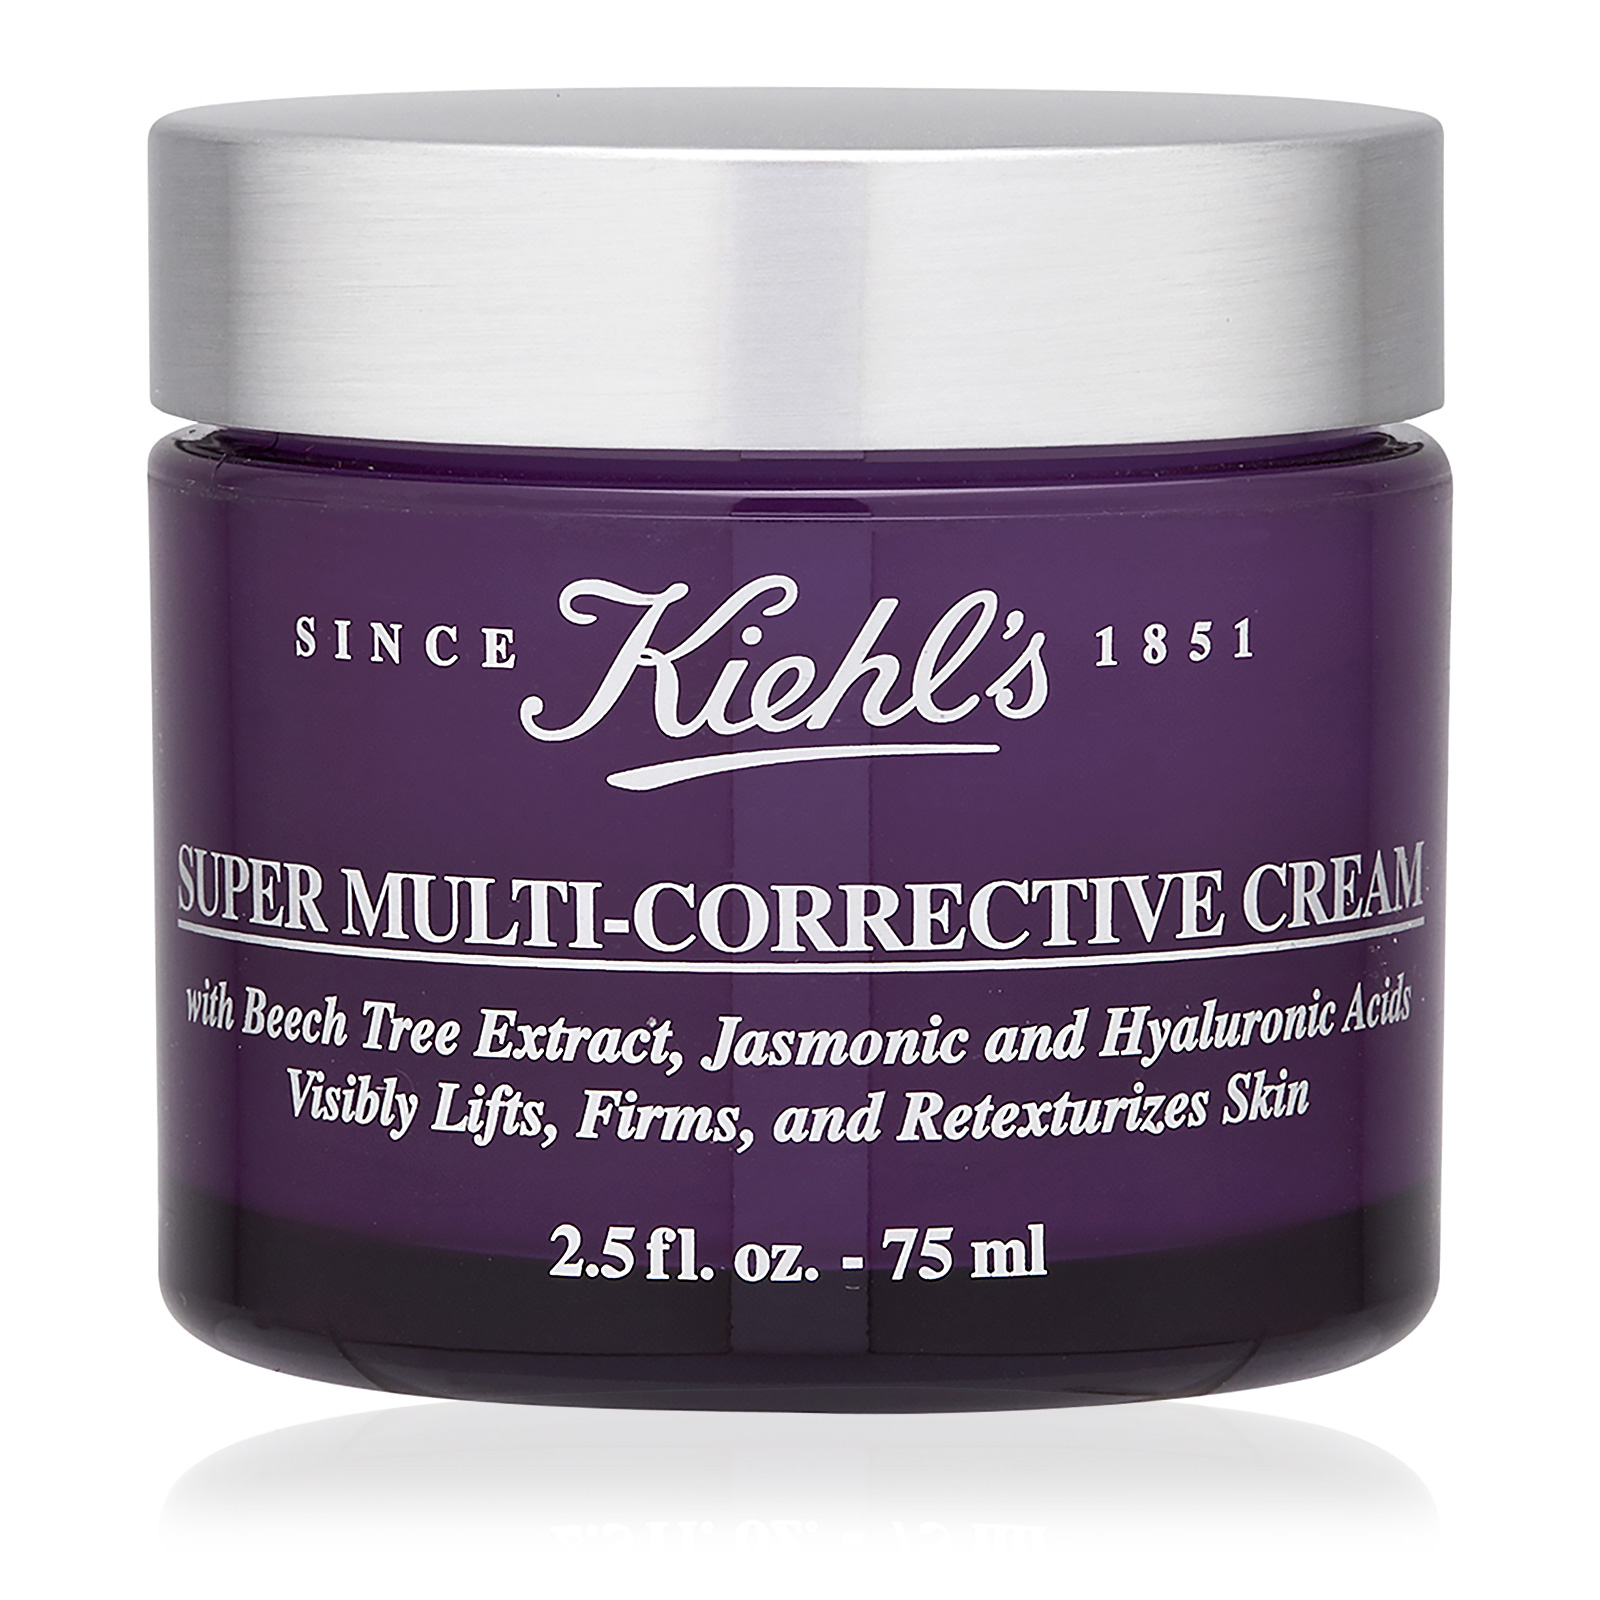 Kiehl's Since 1851 Super Multi-Corrective Cream - 2.5 fl oz jar